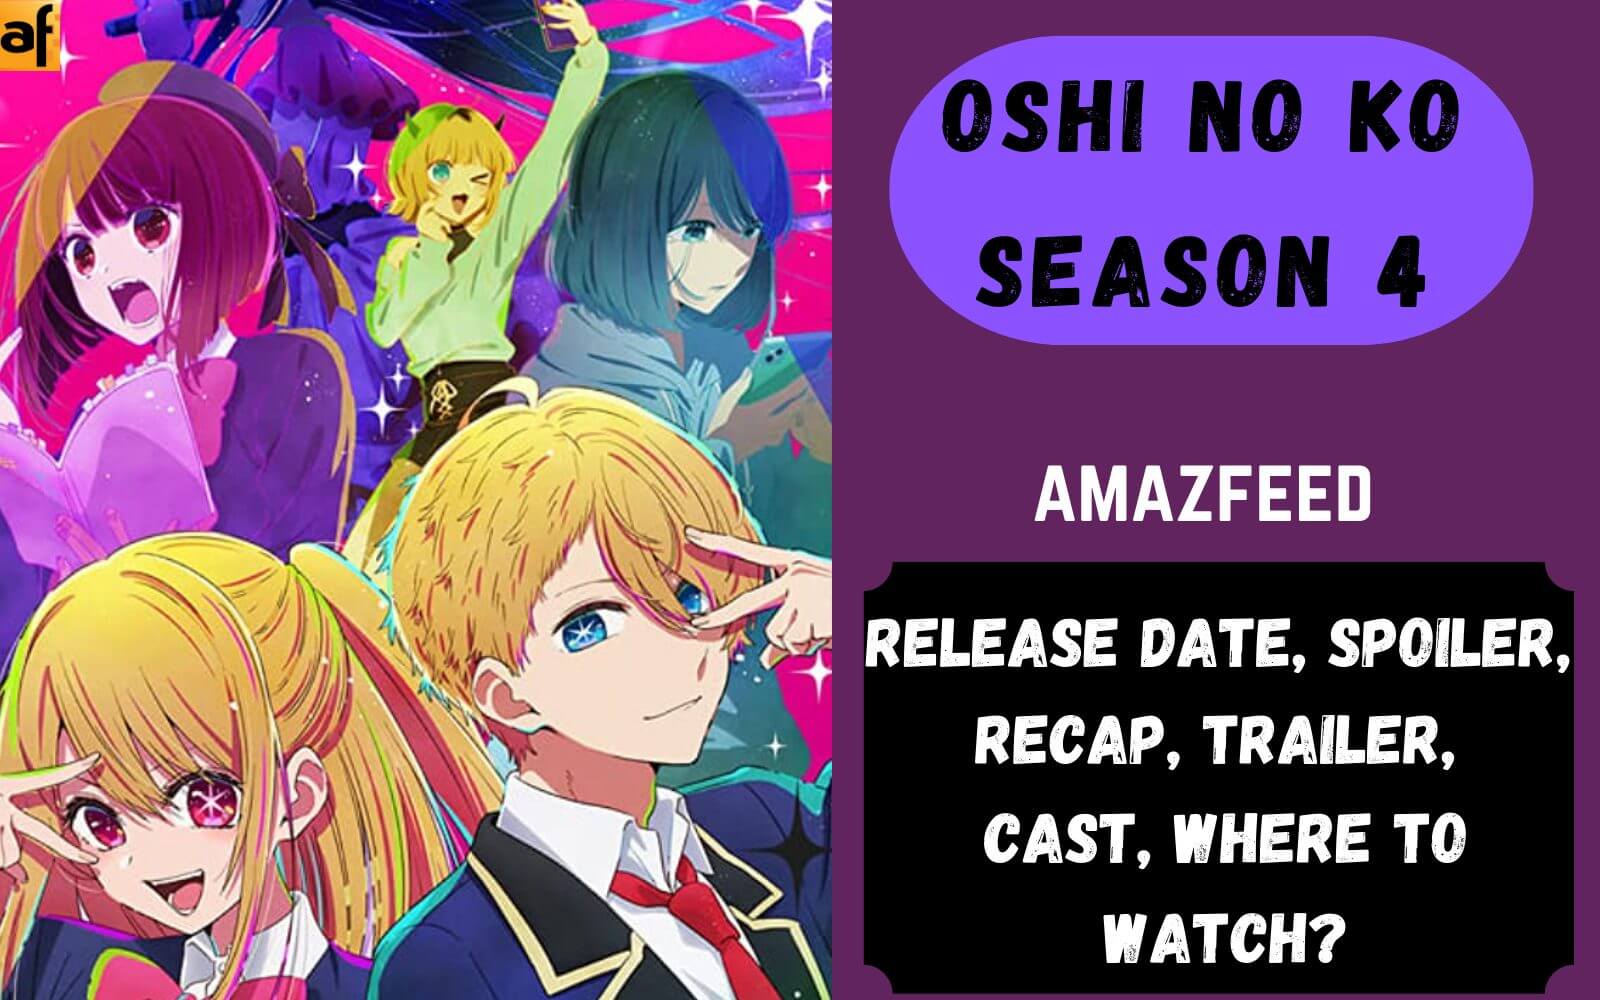 Oshi No Ko anime: Release date, studio details, trailer, plot and more